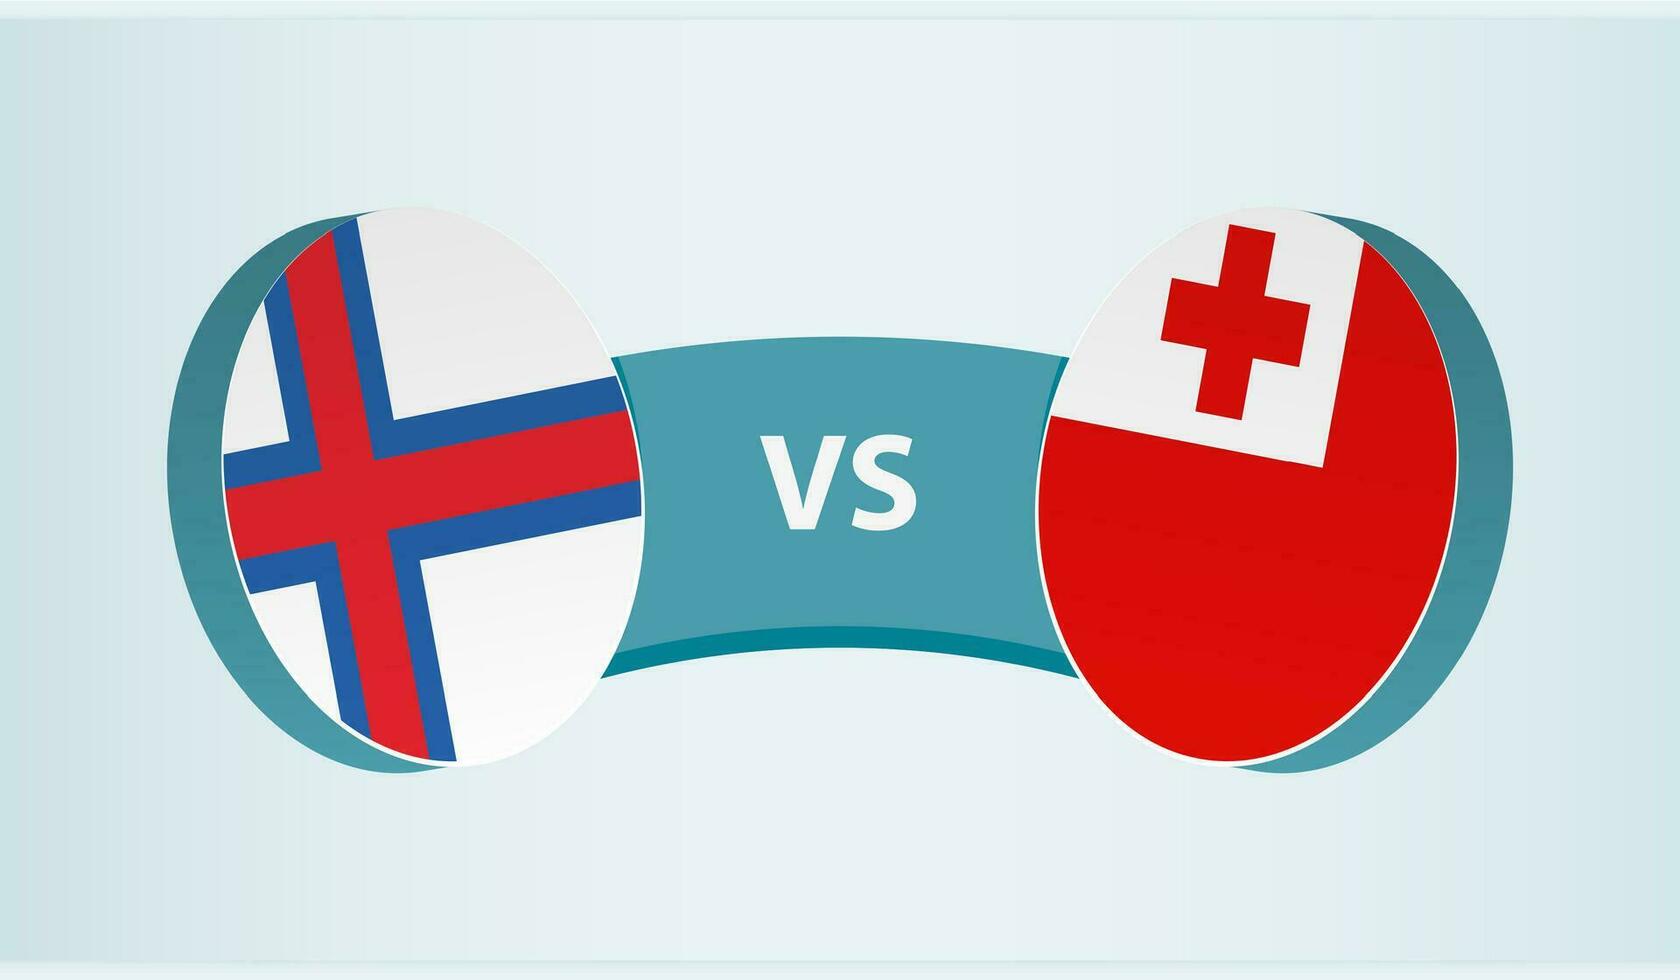 Faroe Islands versus Tonga, team sports competition concept. vector